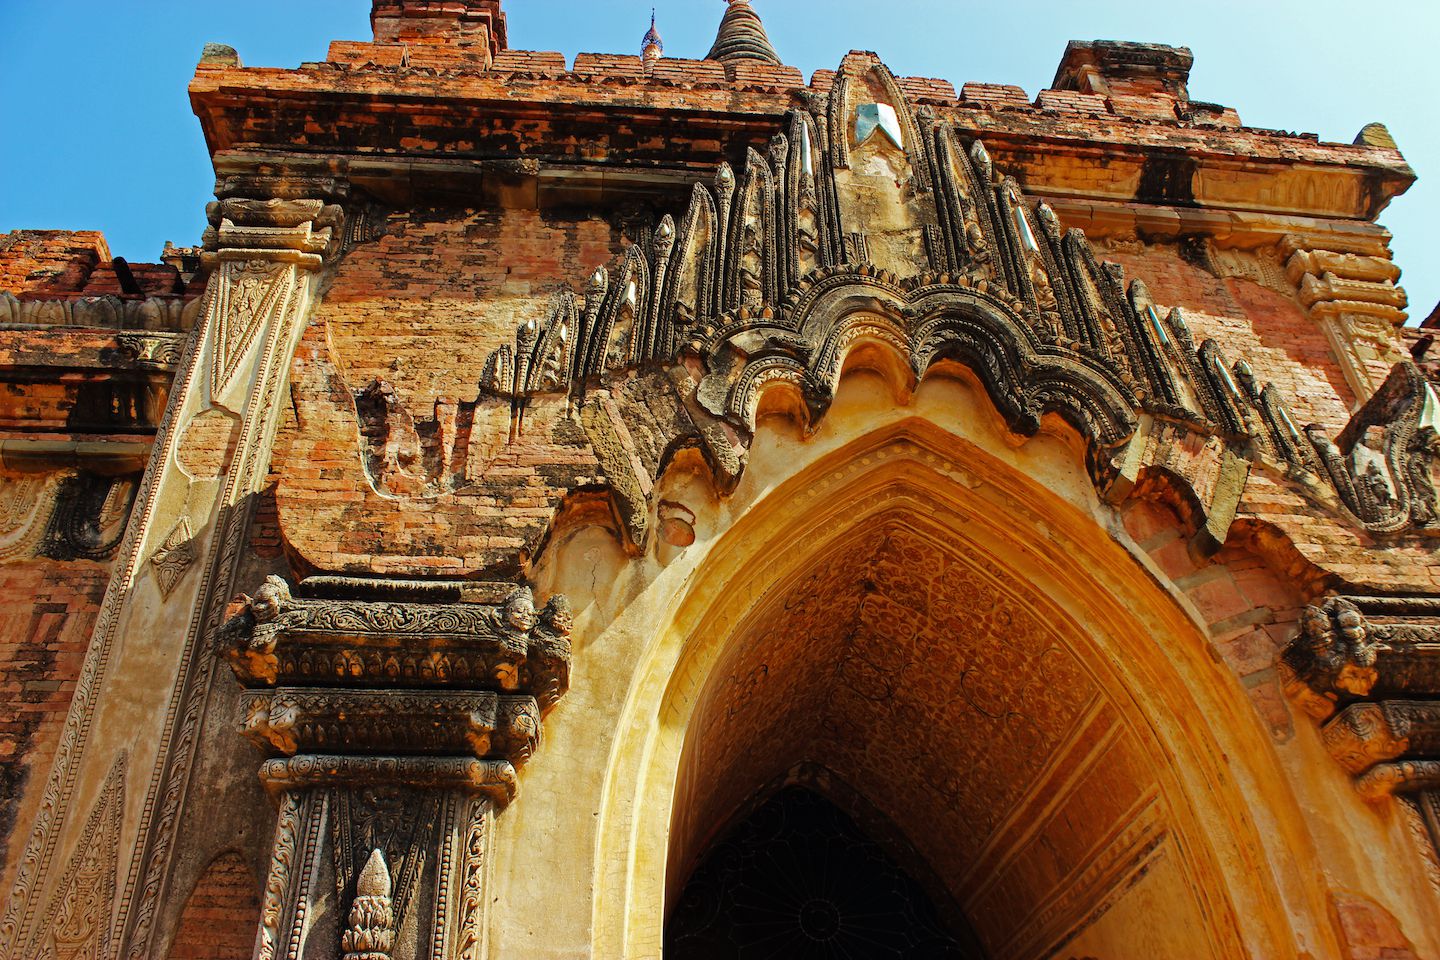 Entrance at Dhammayangyi Temple in Bagan, Myanmar